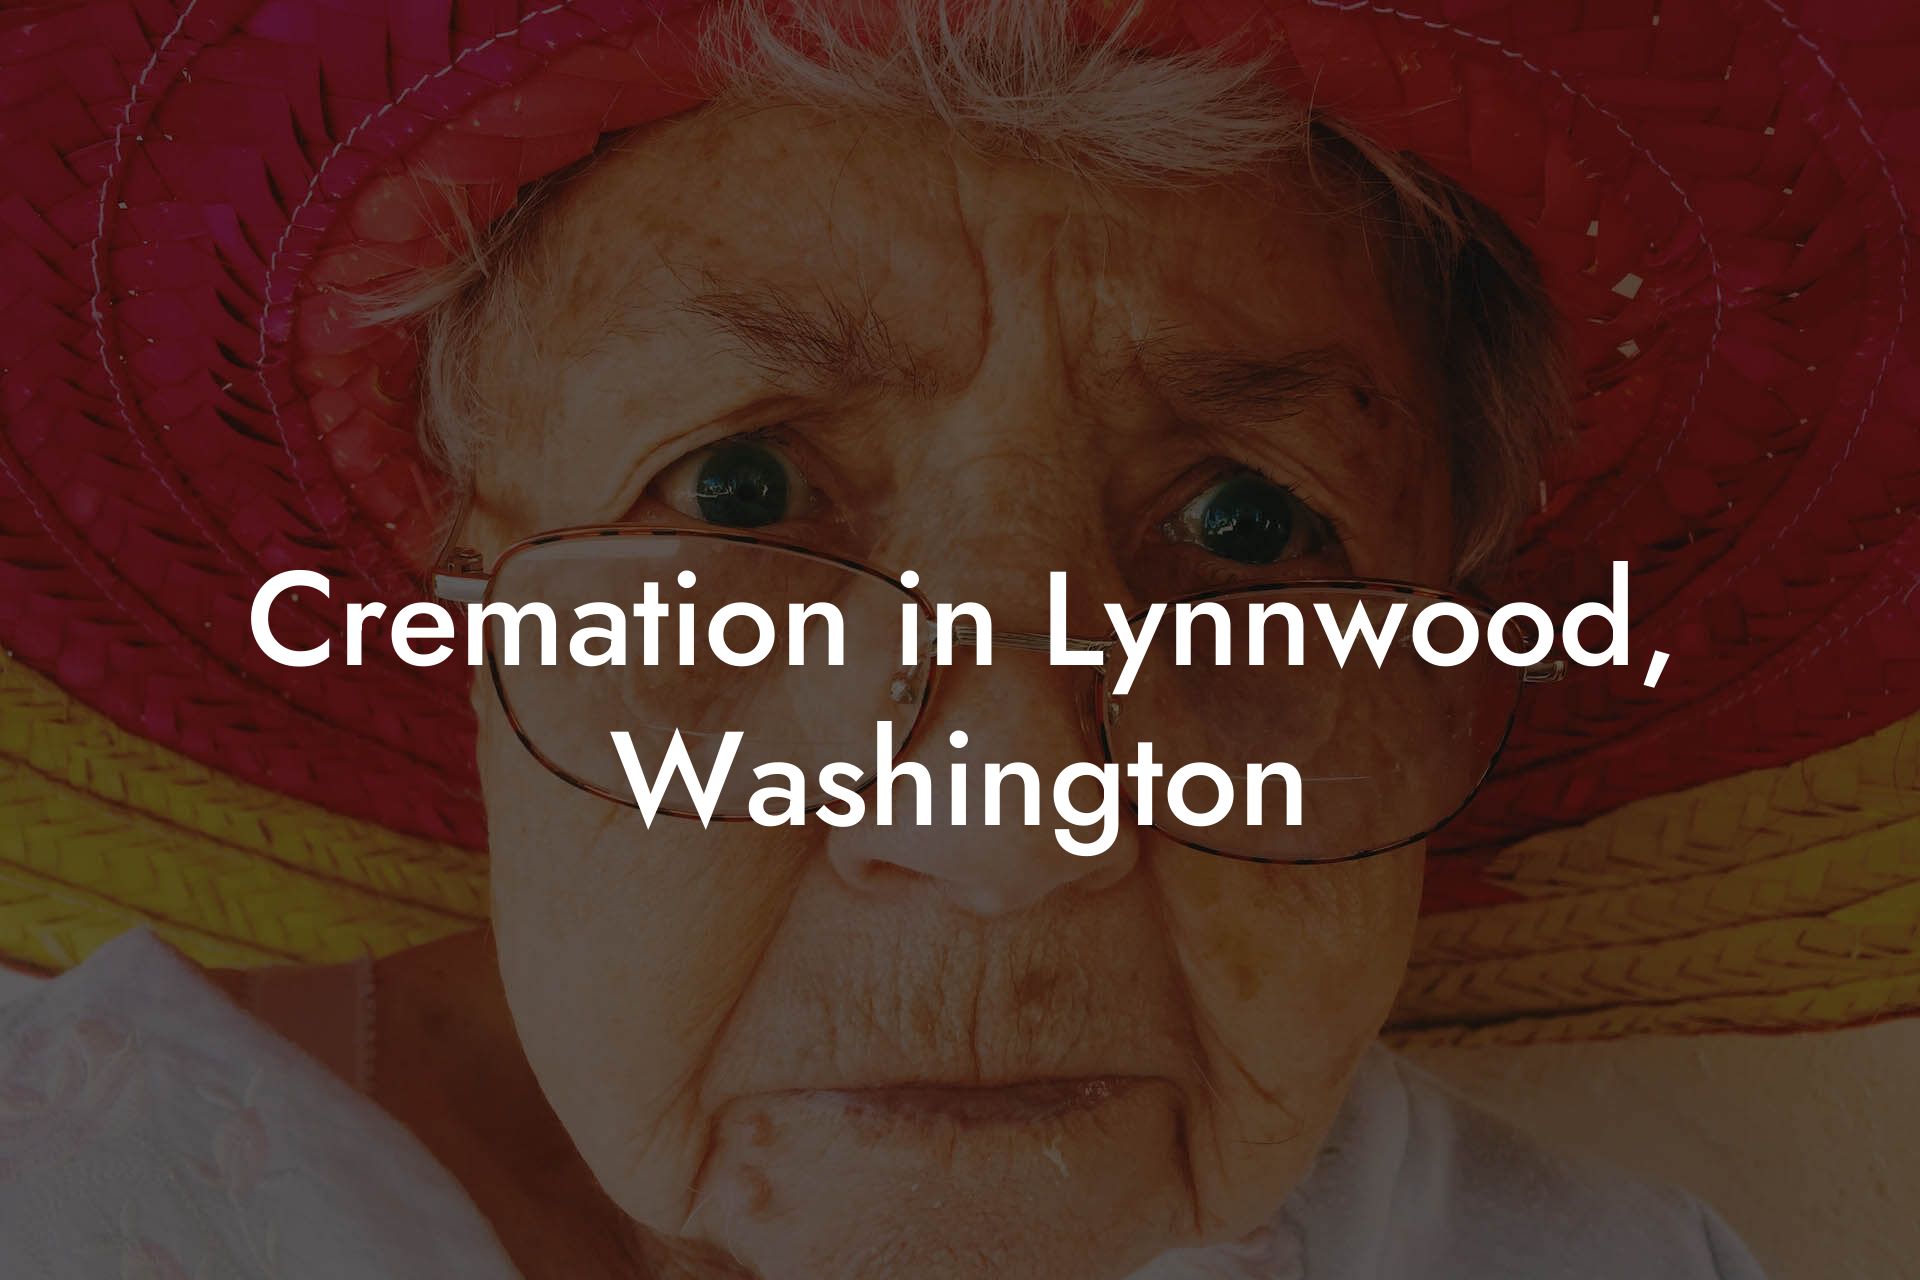 Cremation in Lynnwood, Washington